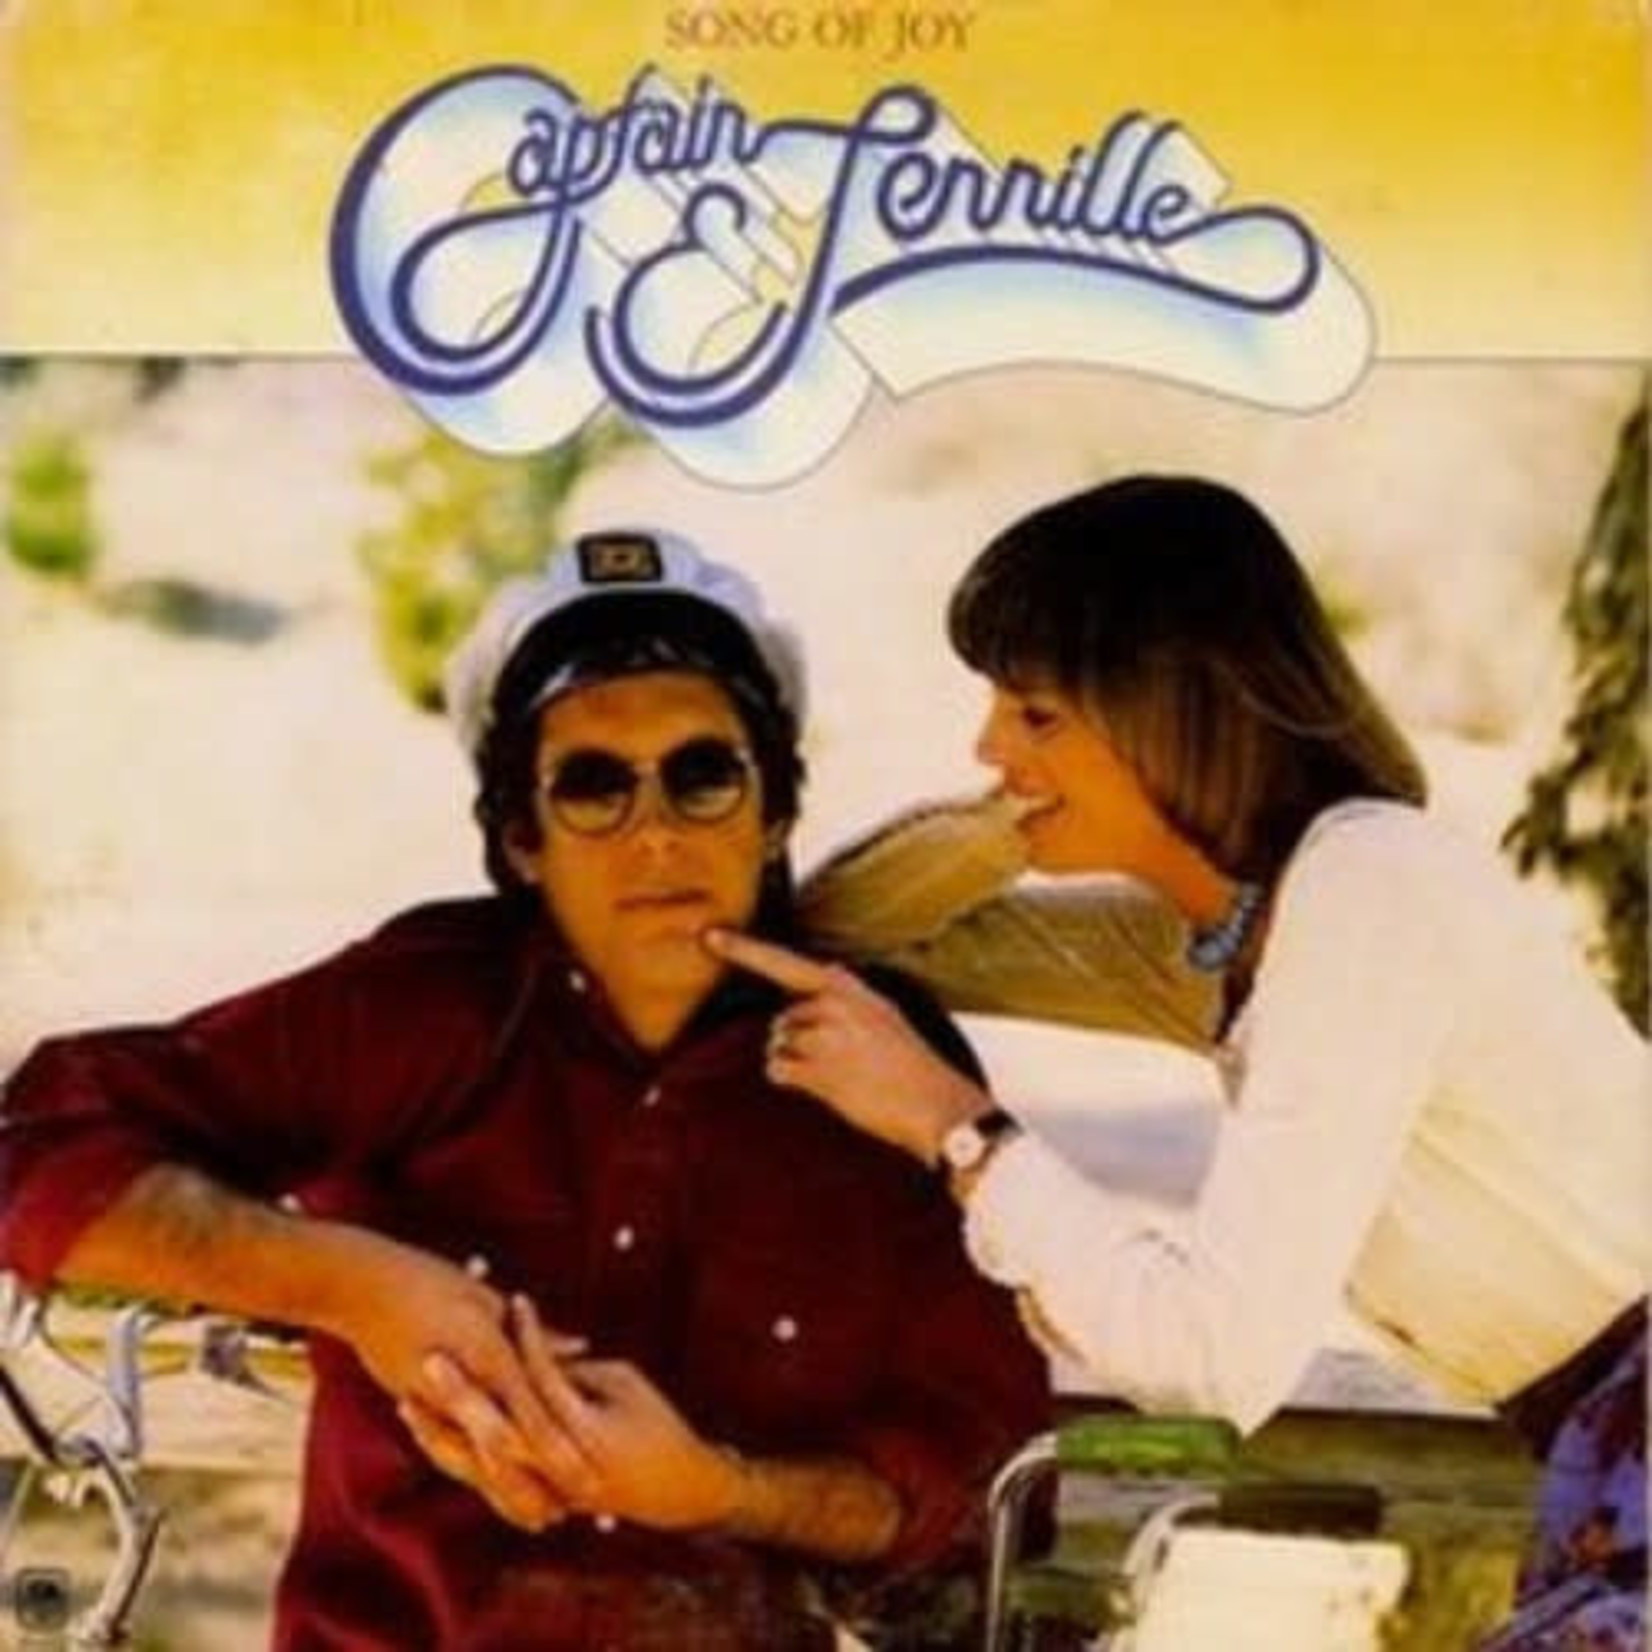 Captain and Tennille Captain & Tennille – Song Of Joy (VG, 1976, LP, Gatefold, A&M Records – SP-4570, Canada)